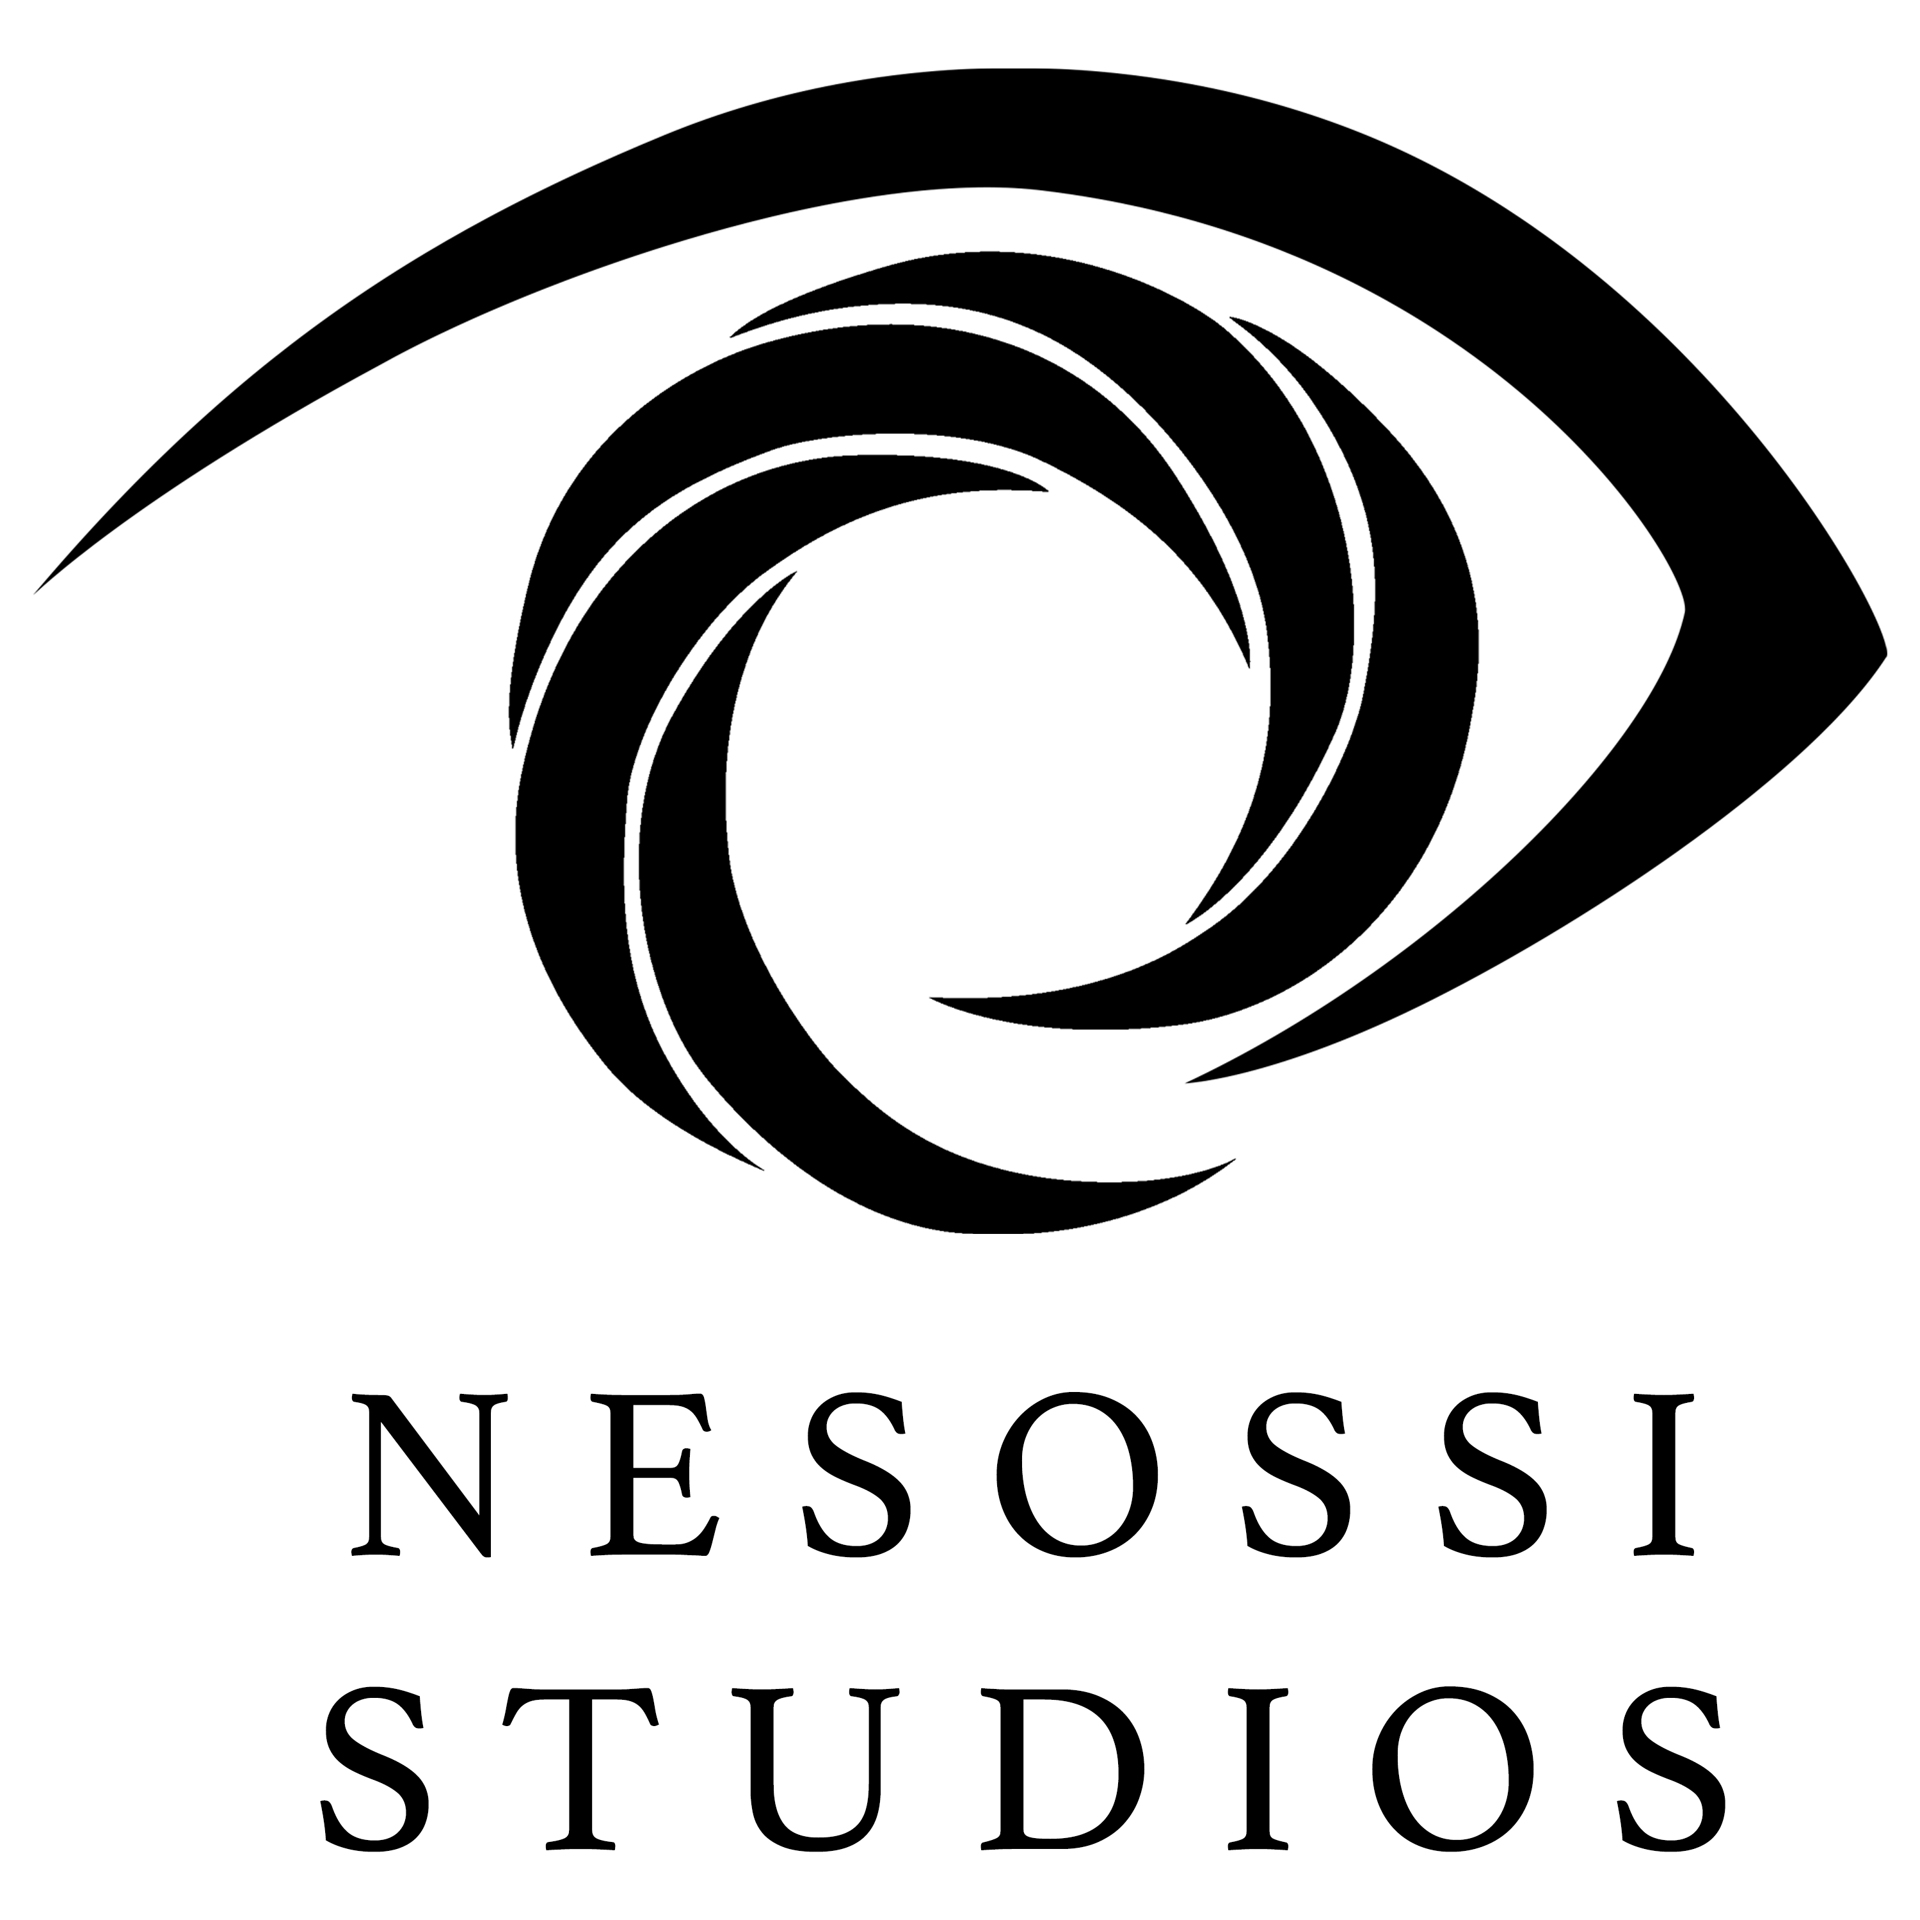 Nesossi Studios